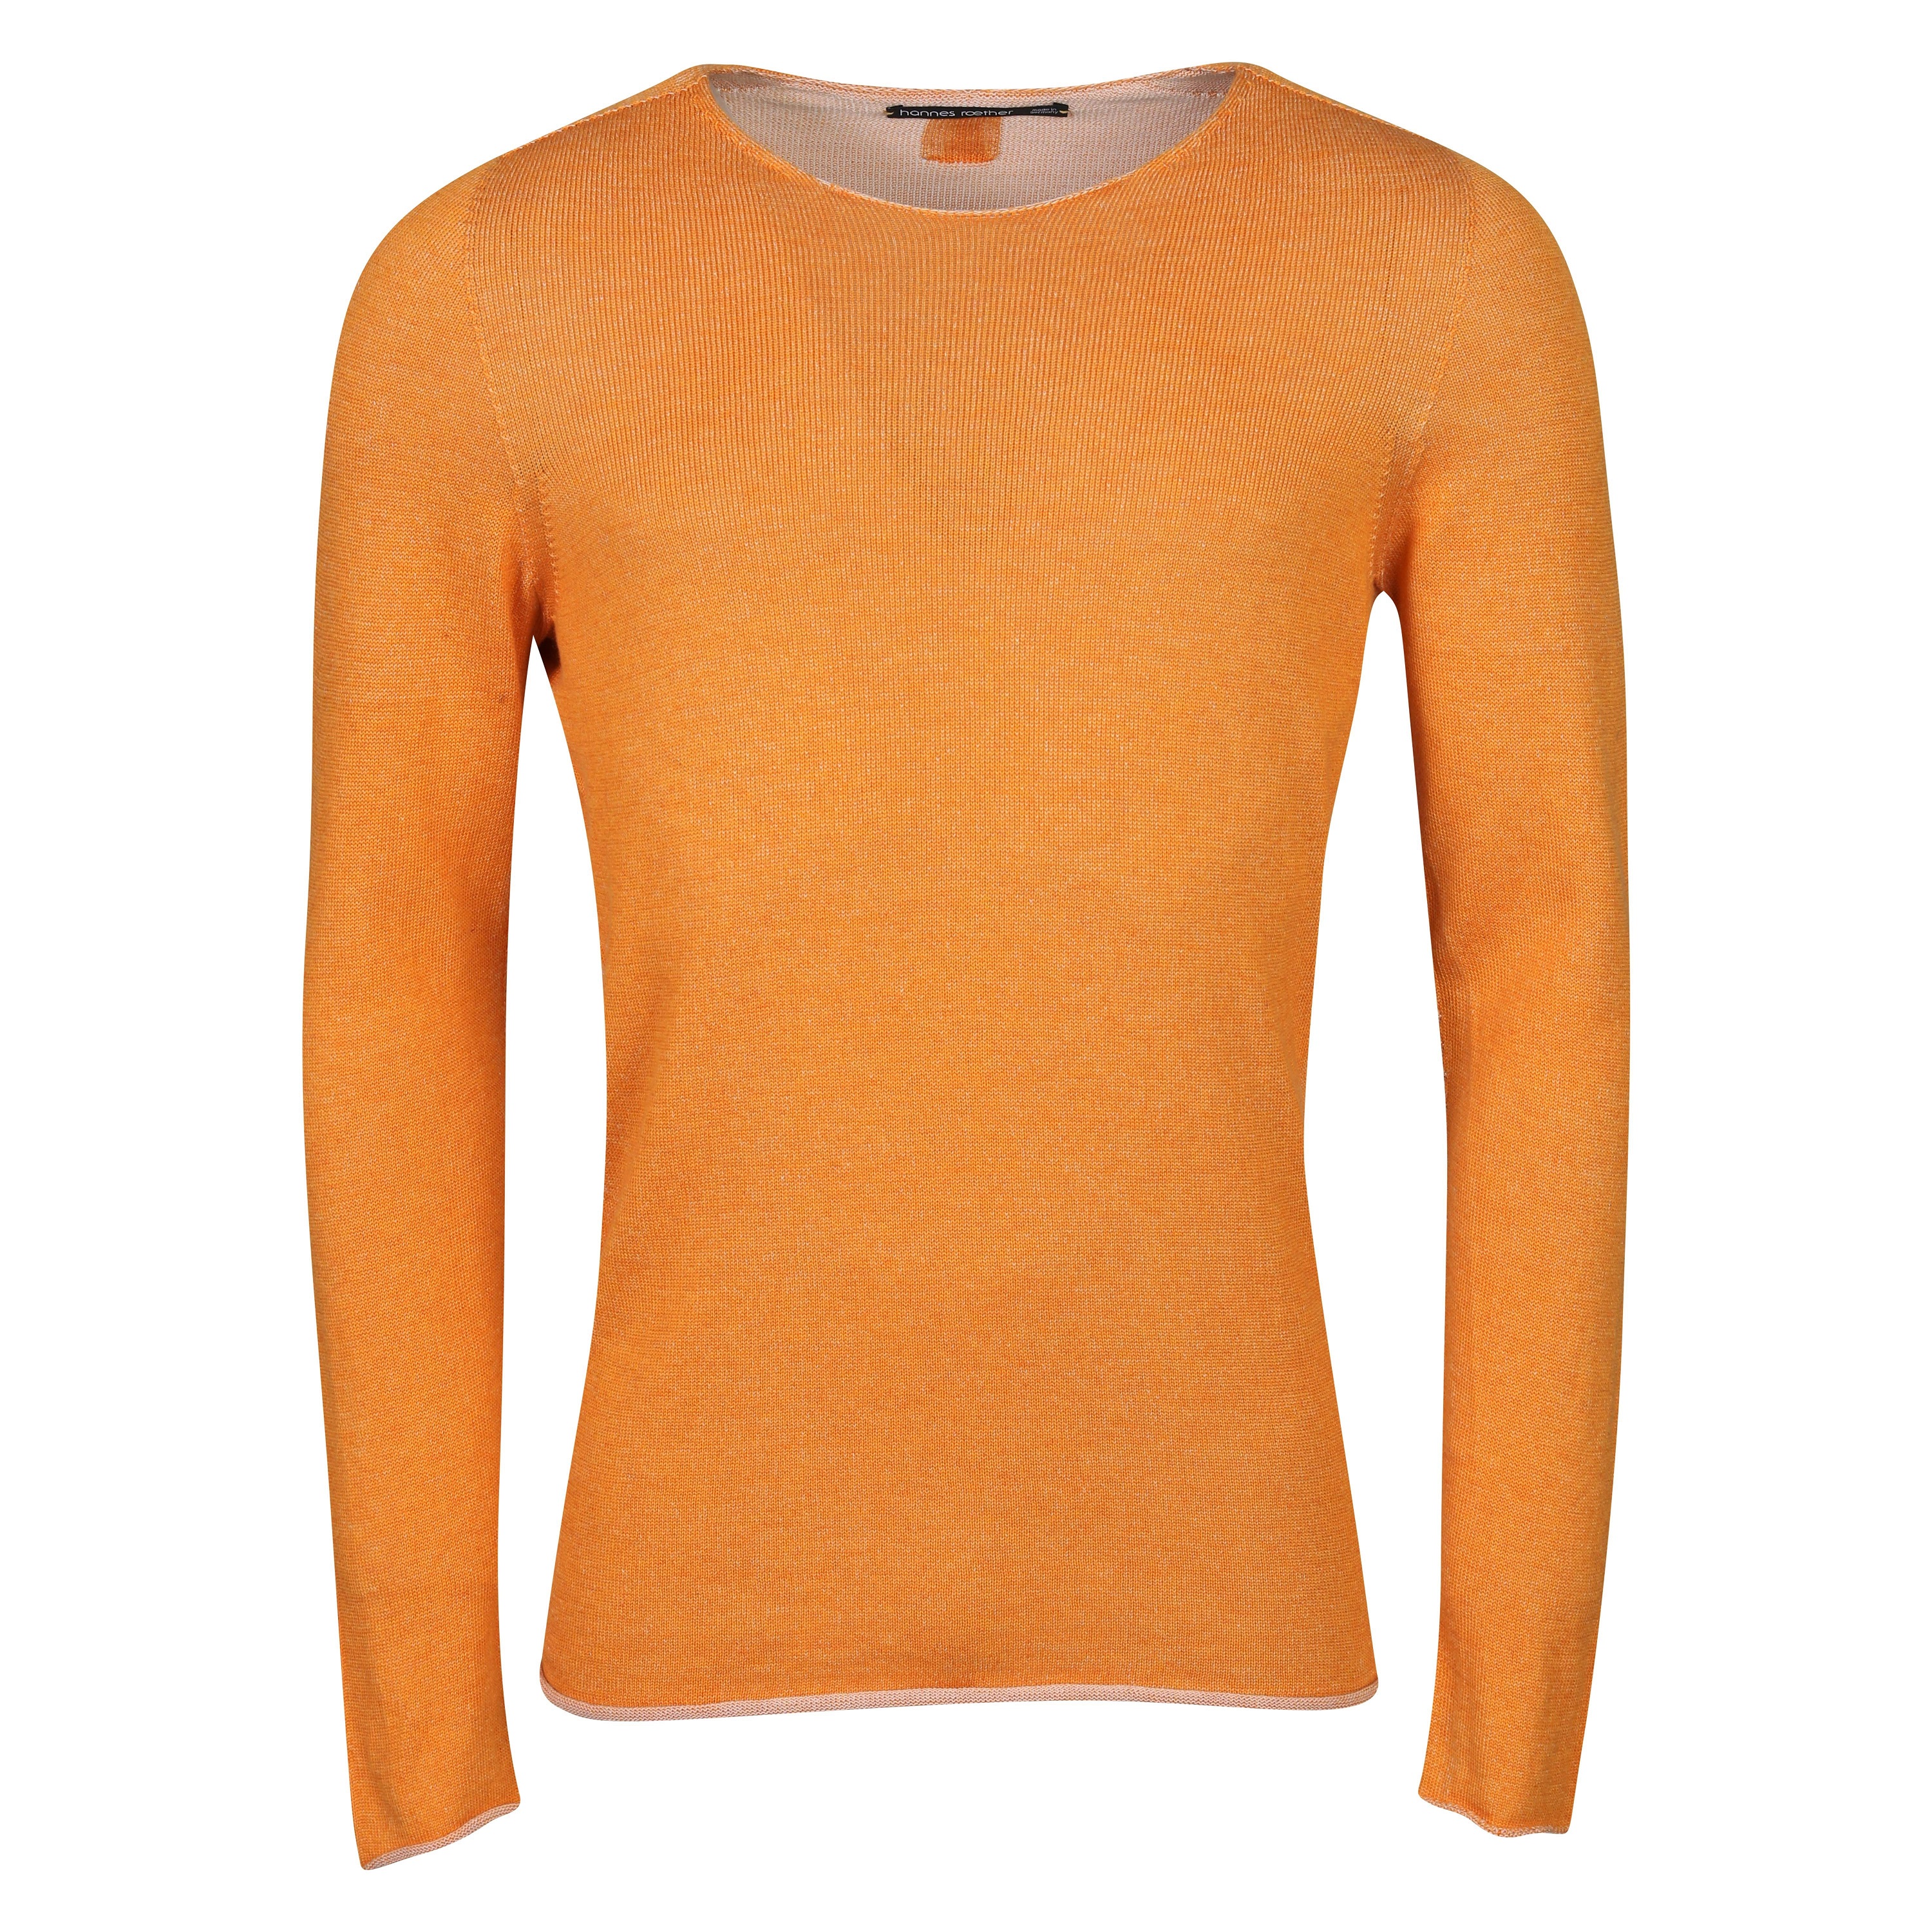 Hannes Roether Cotton/Cashmere Sweater in Orange Melange